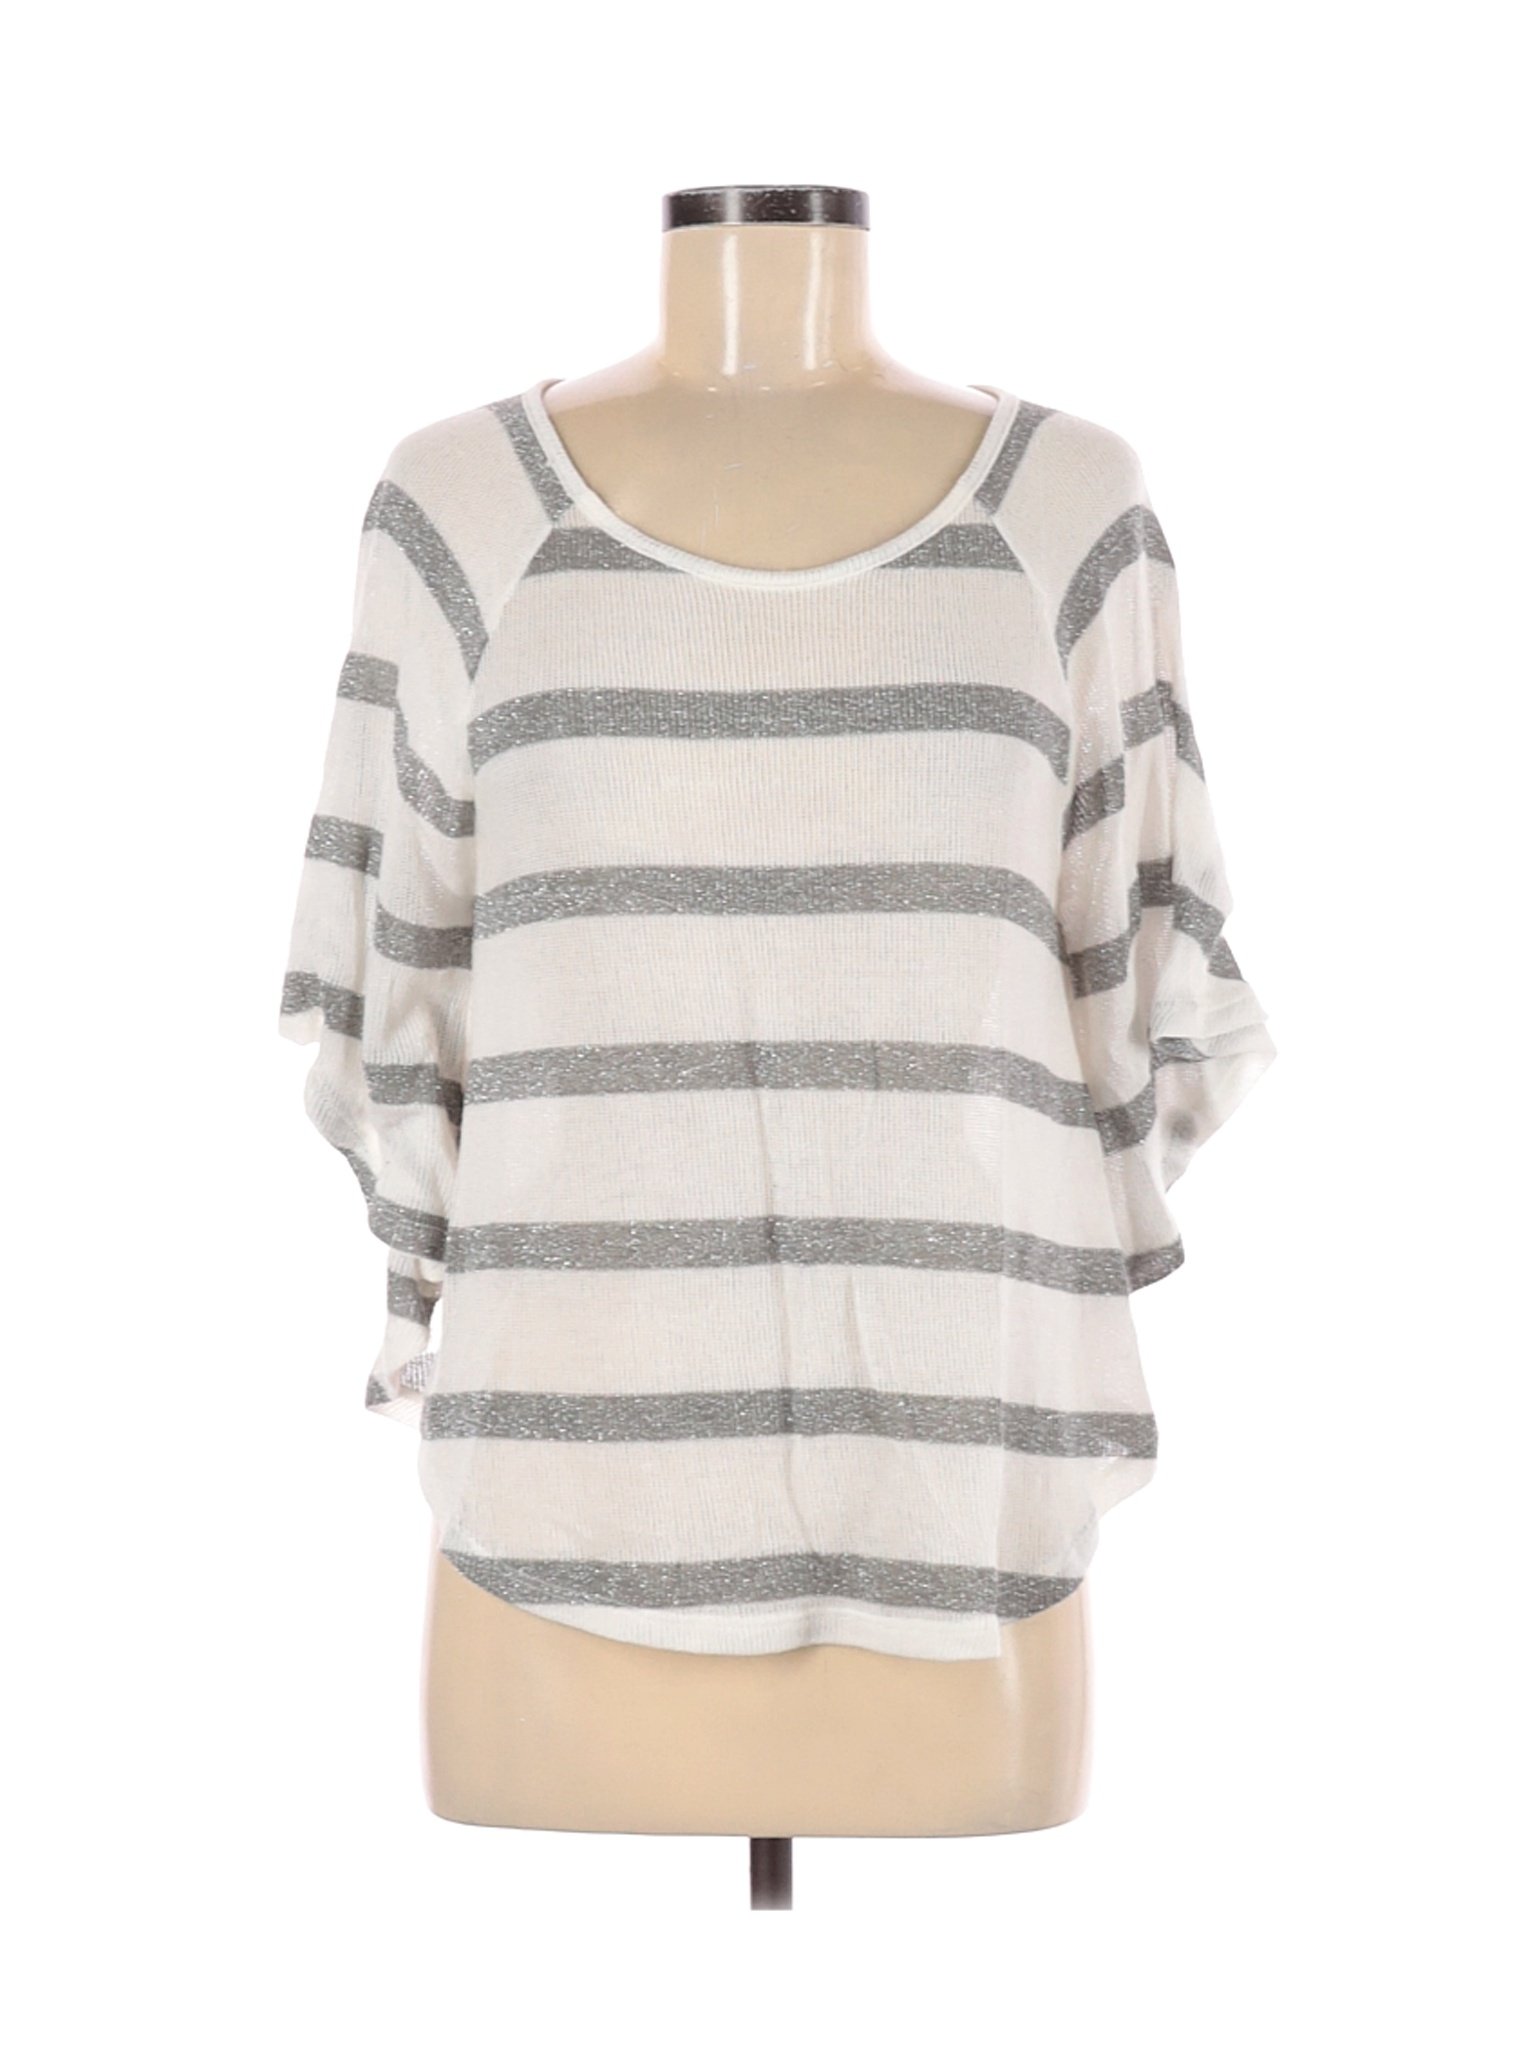 INC International Concepts Women White Pullover Sweater M | eBay